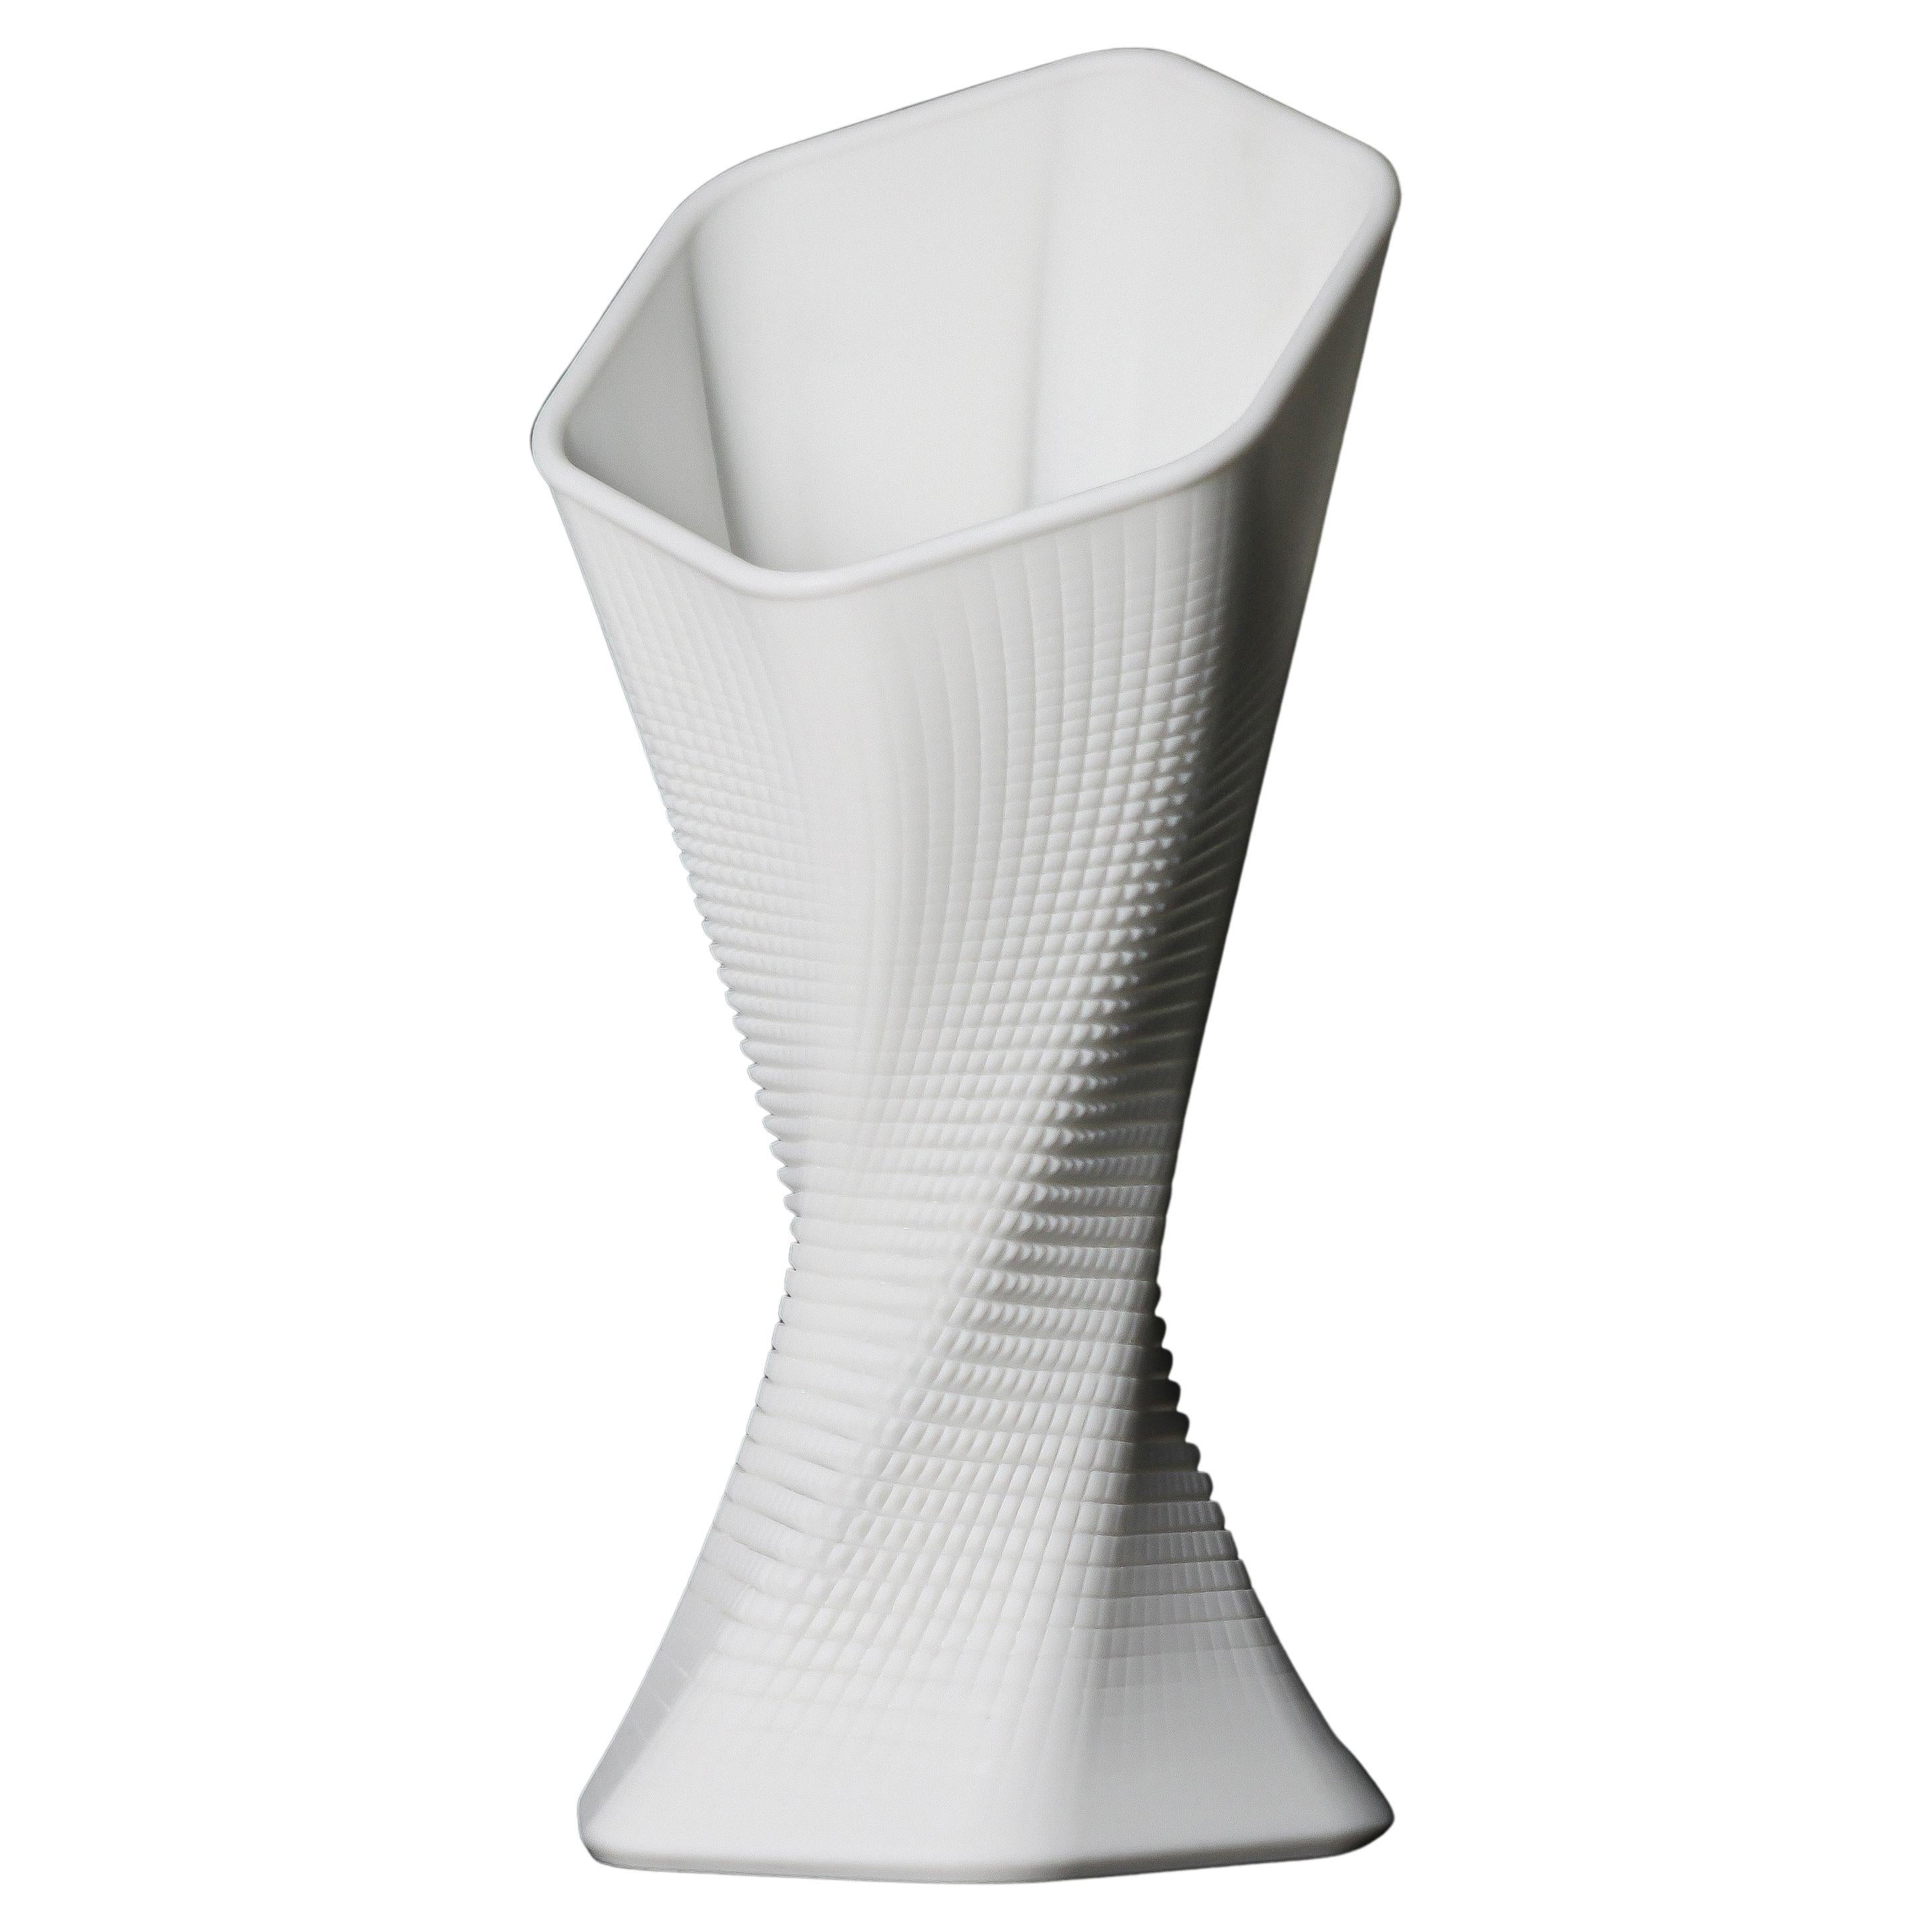 Modern Vase "LA COUPE" made of Bio Resin, Germany